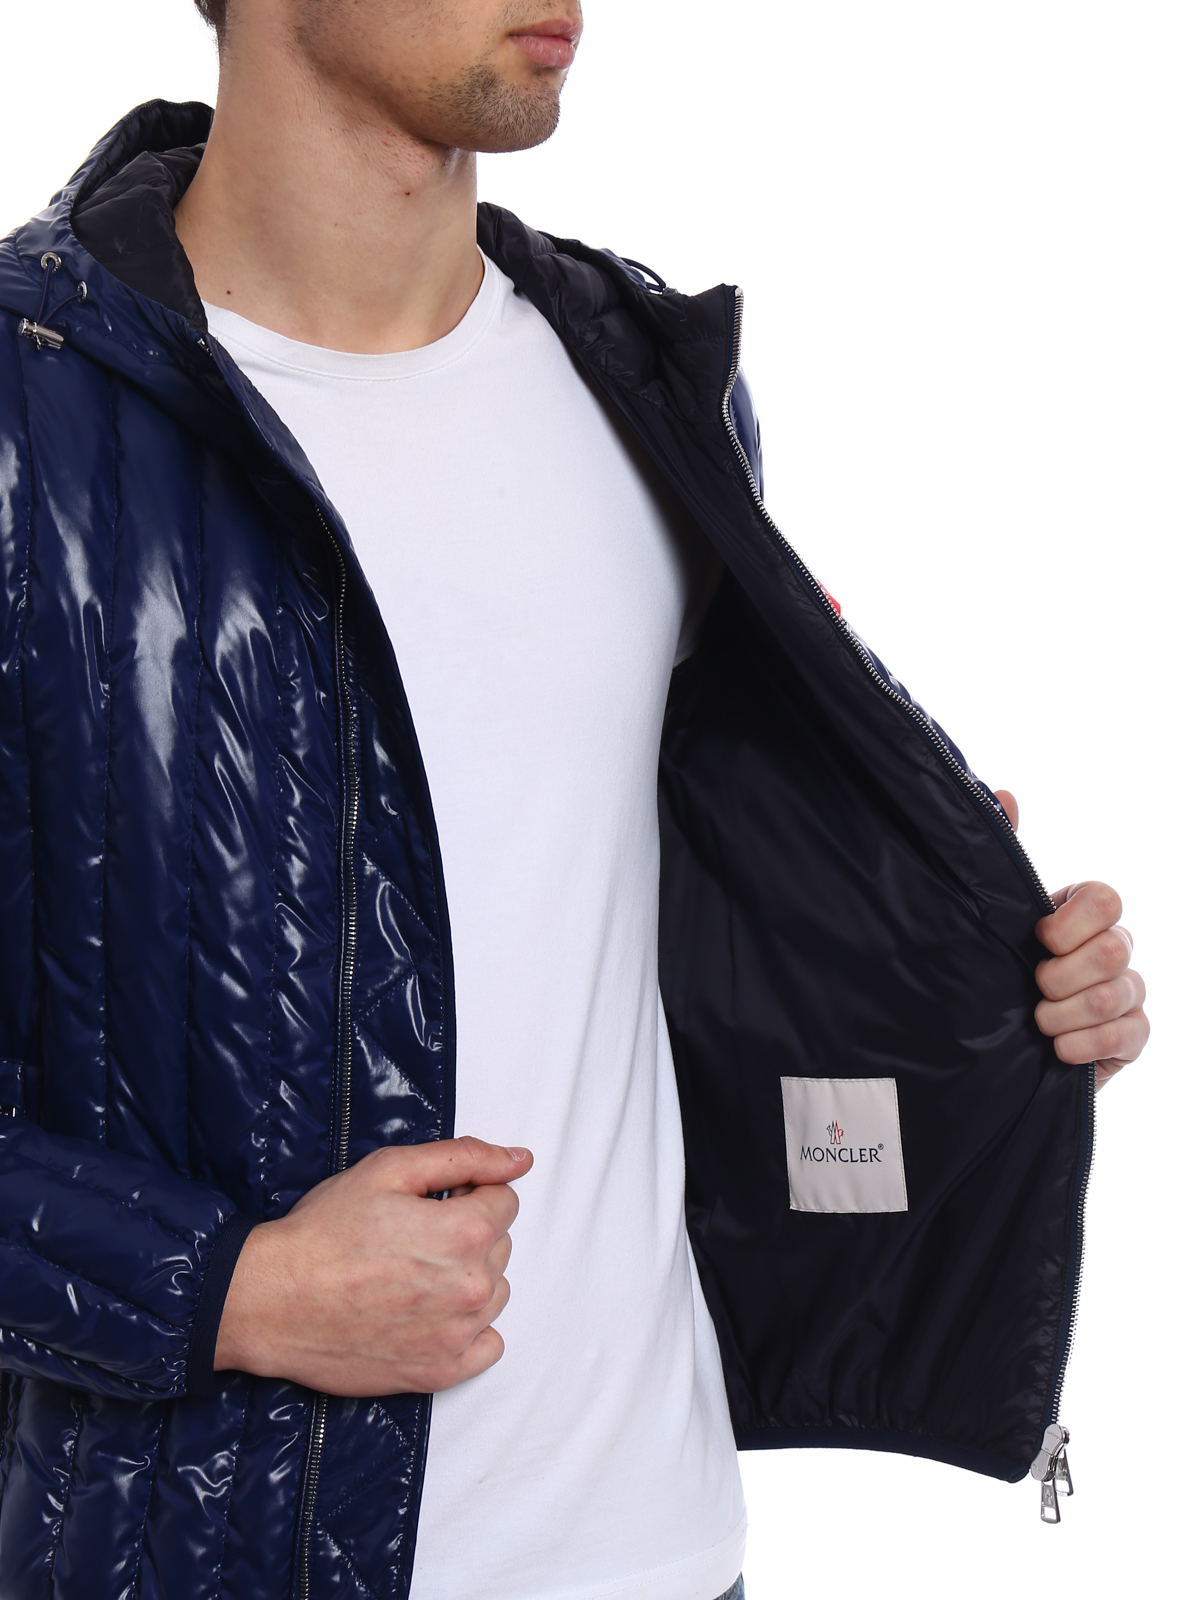 moncler glossy jacket